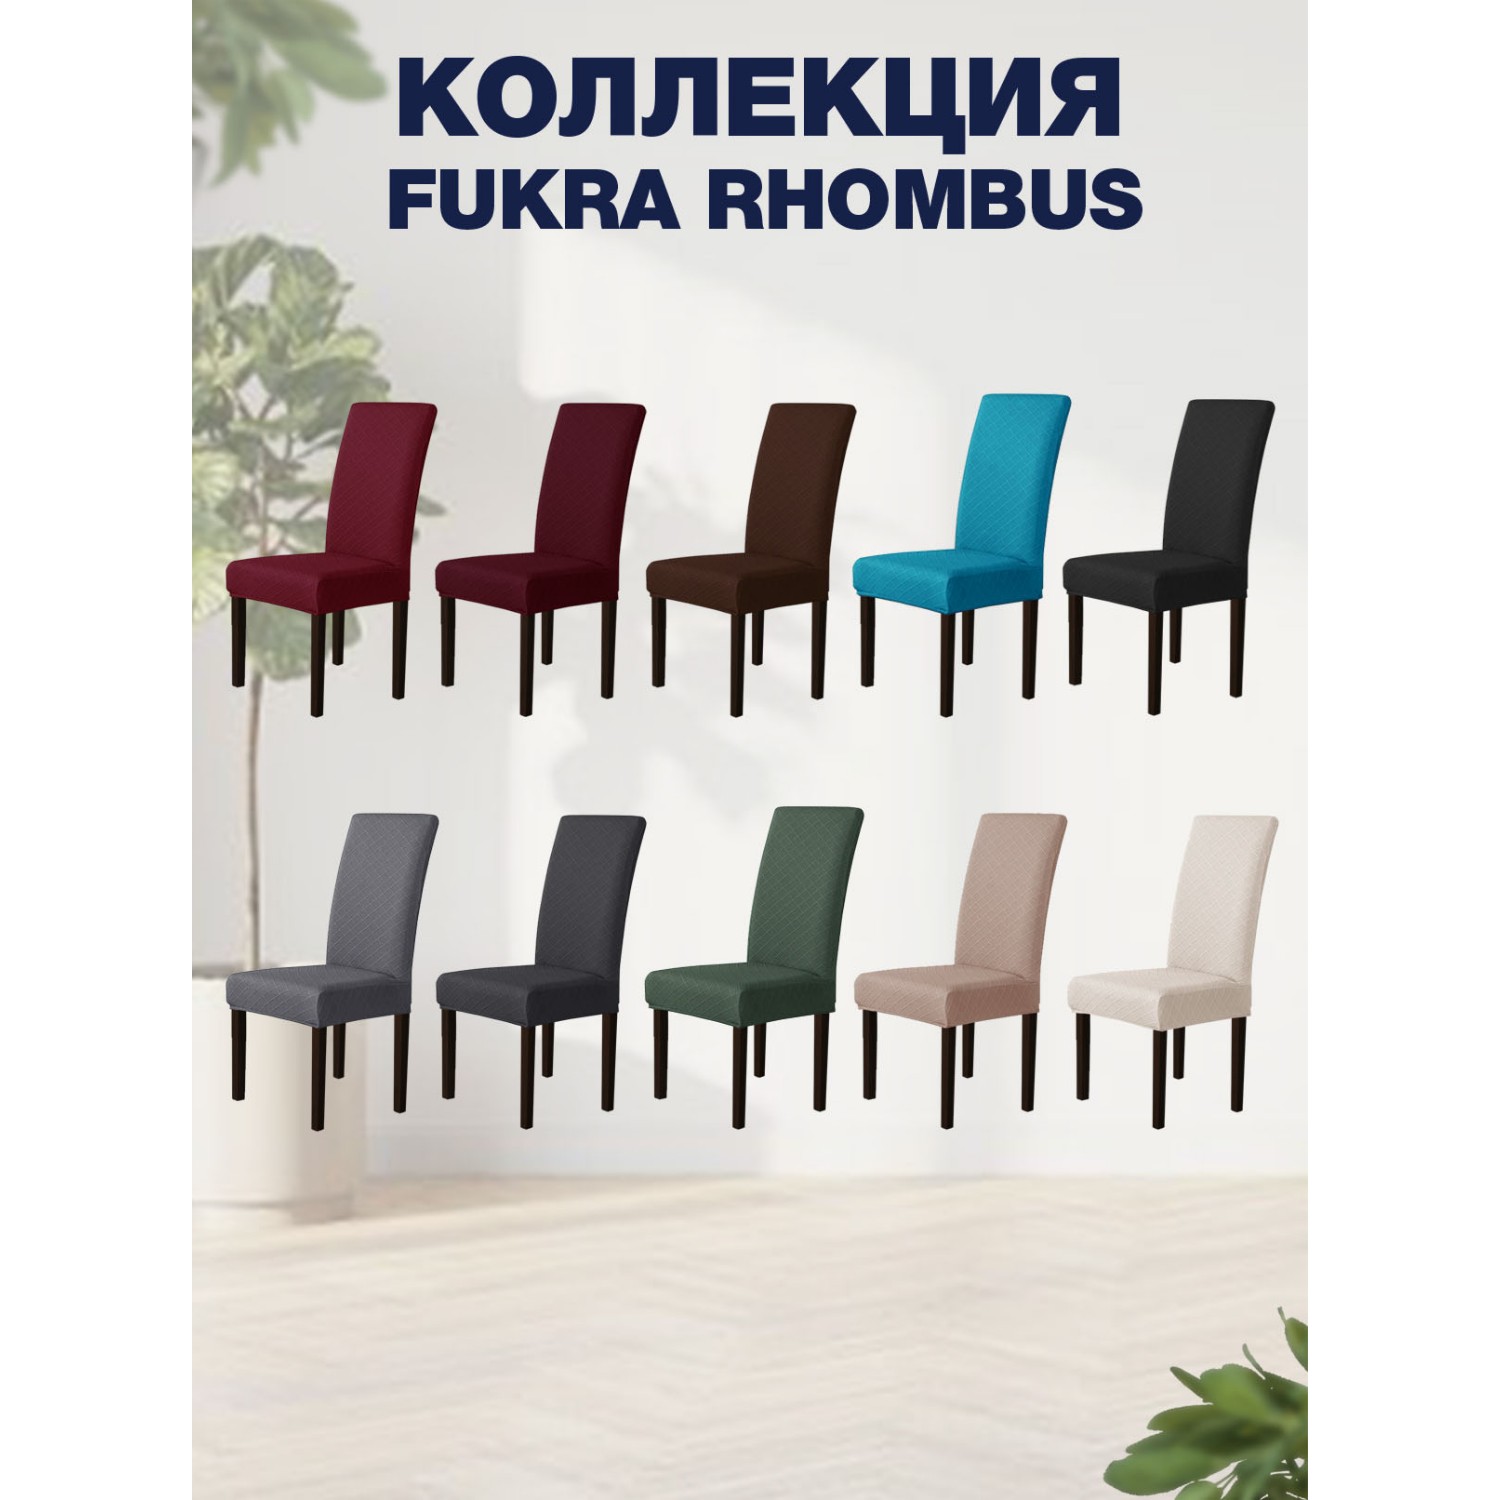 Чехол на стул LuxAlto Коллекция Fukra rhombus Молочный - фото 3